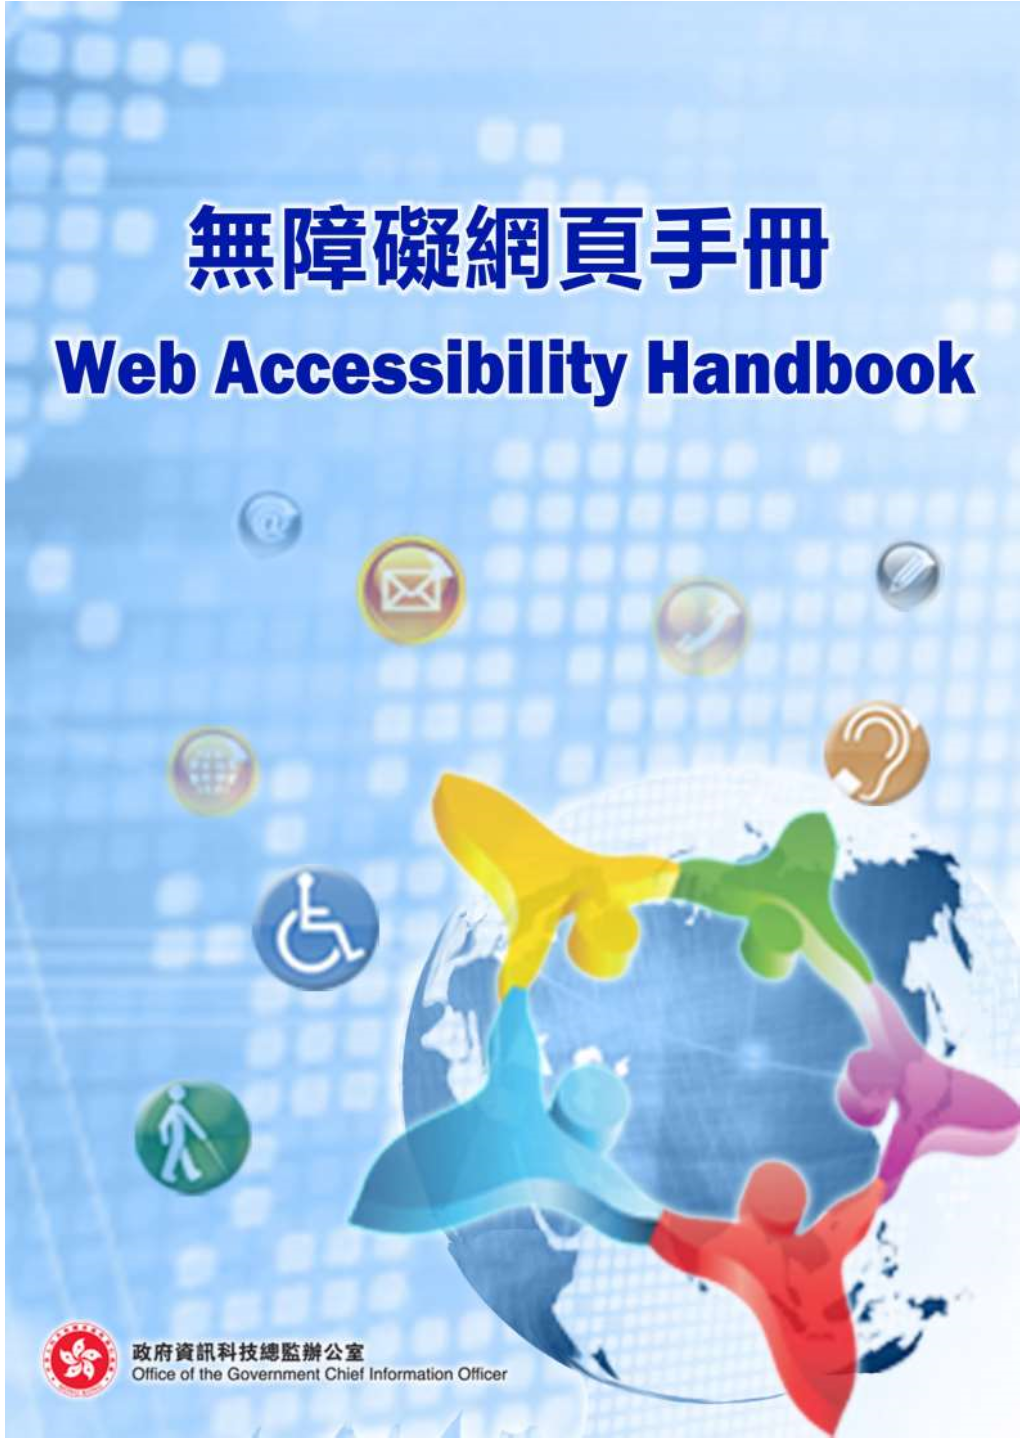 Web Accessibility Handbook Introduction